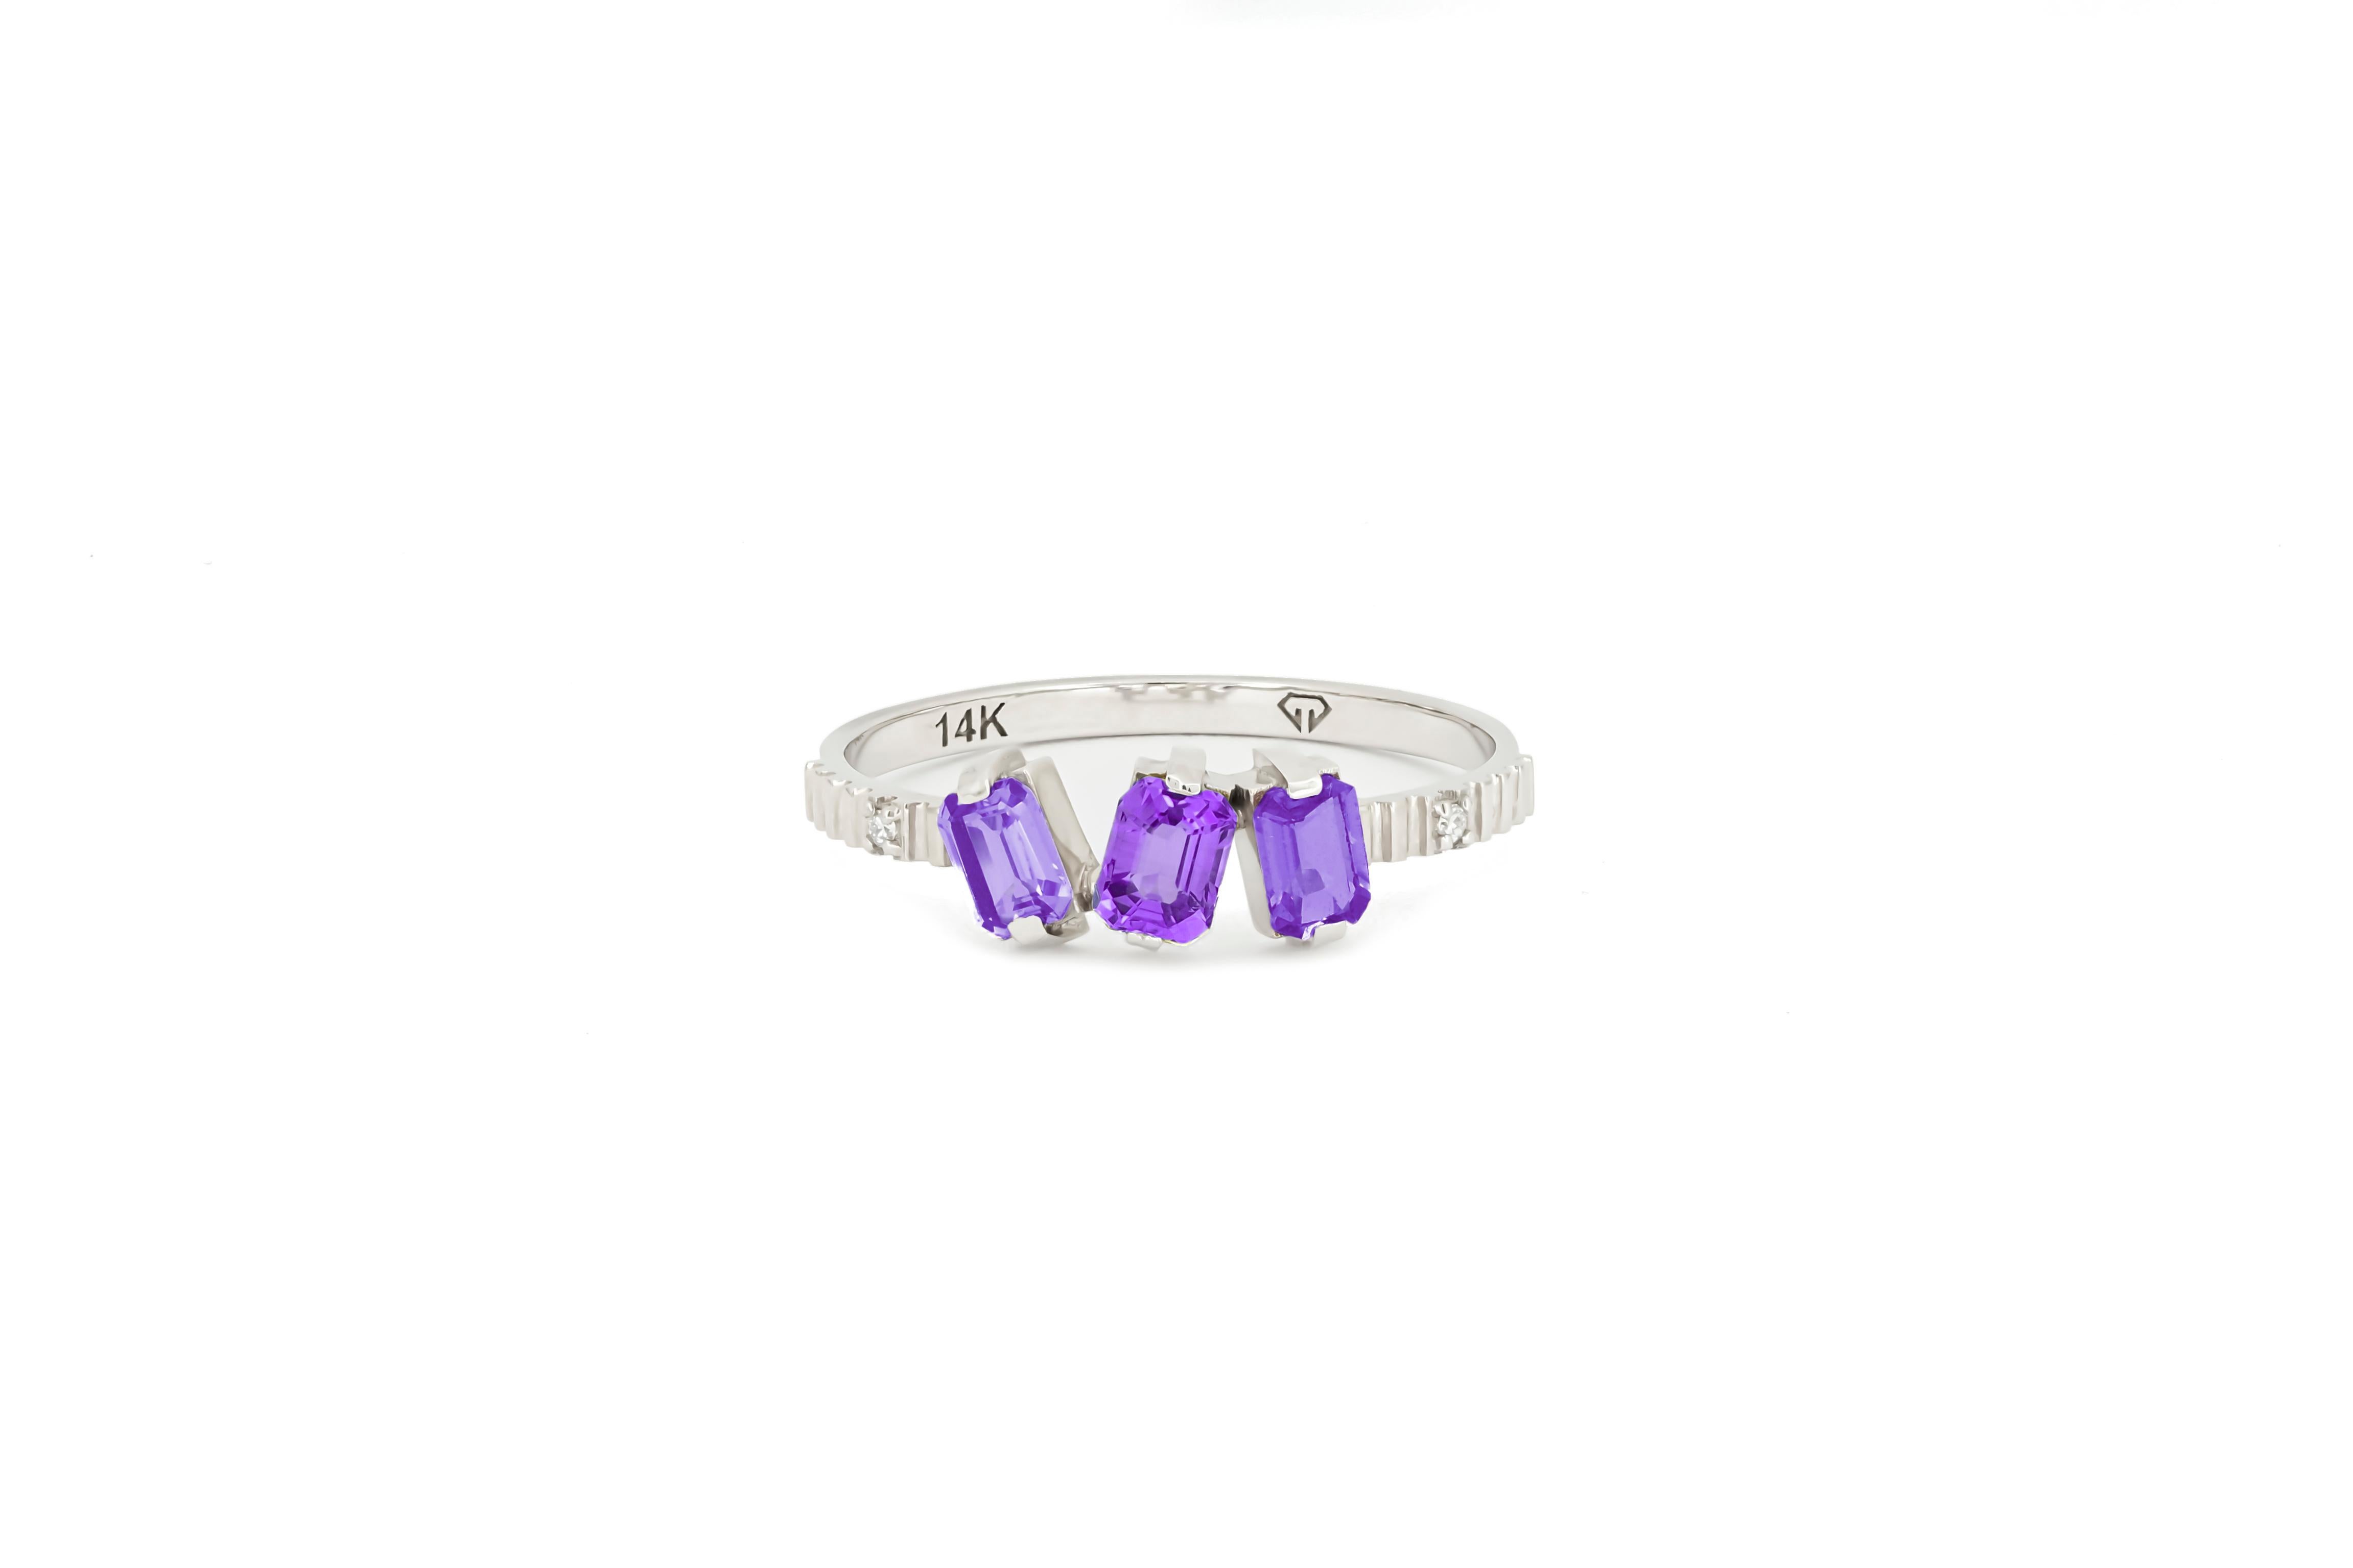 For Sale:  Monochrome purple gemstone 14k ring.  2